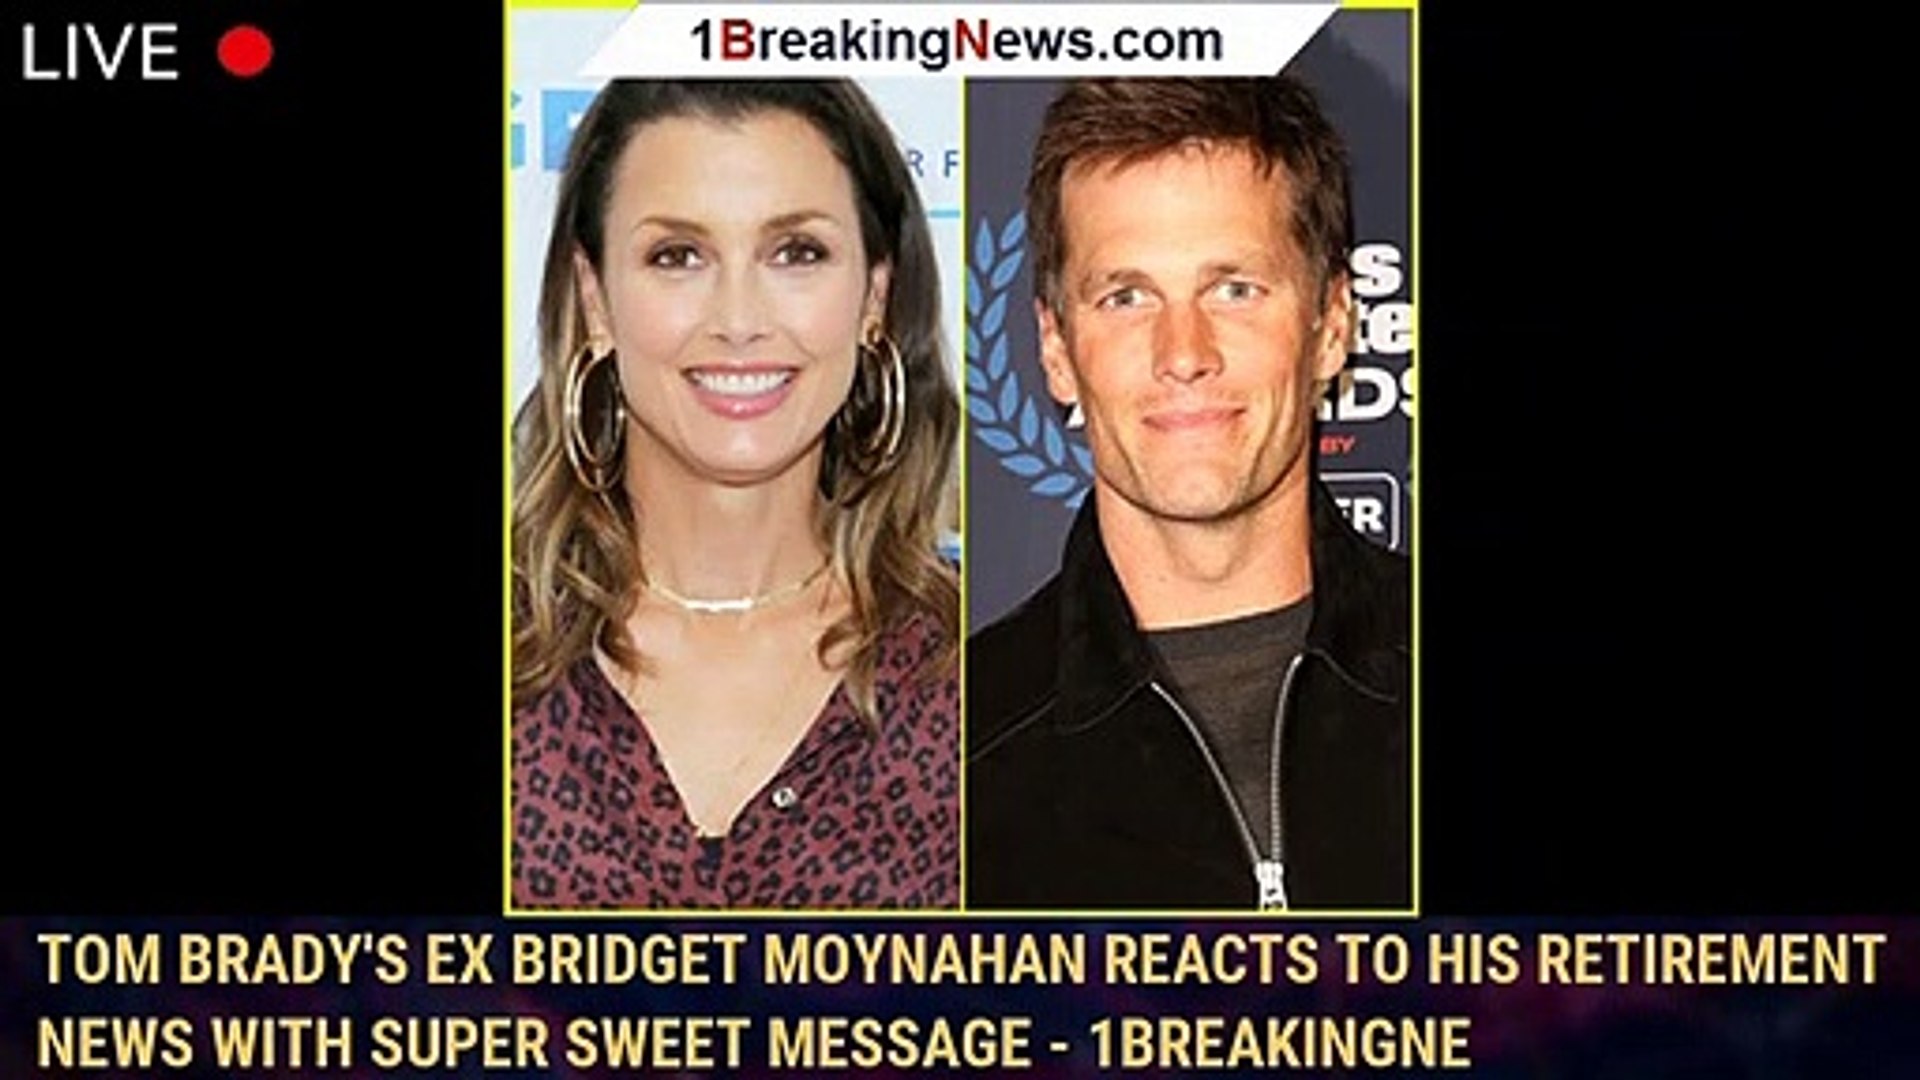 Tom Brady's Ex Bridget Moynahan Reacts to His Retirement News with